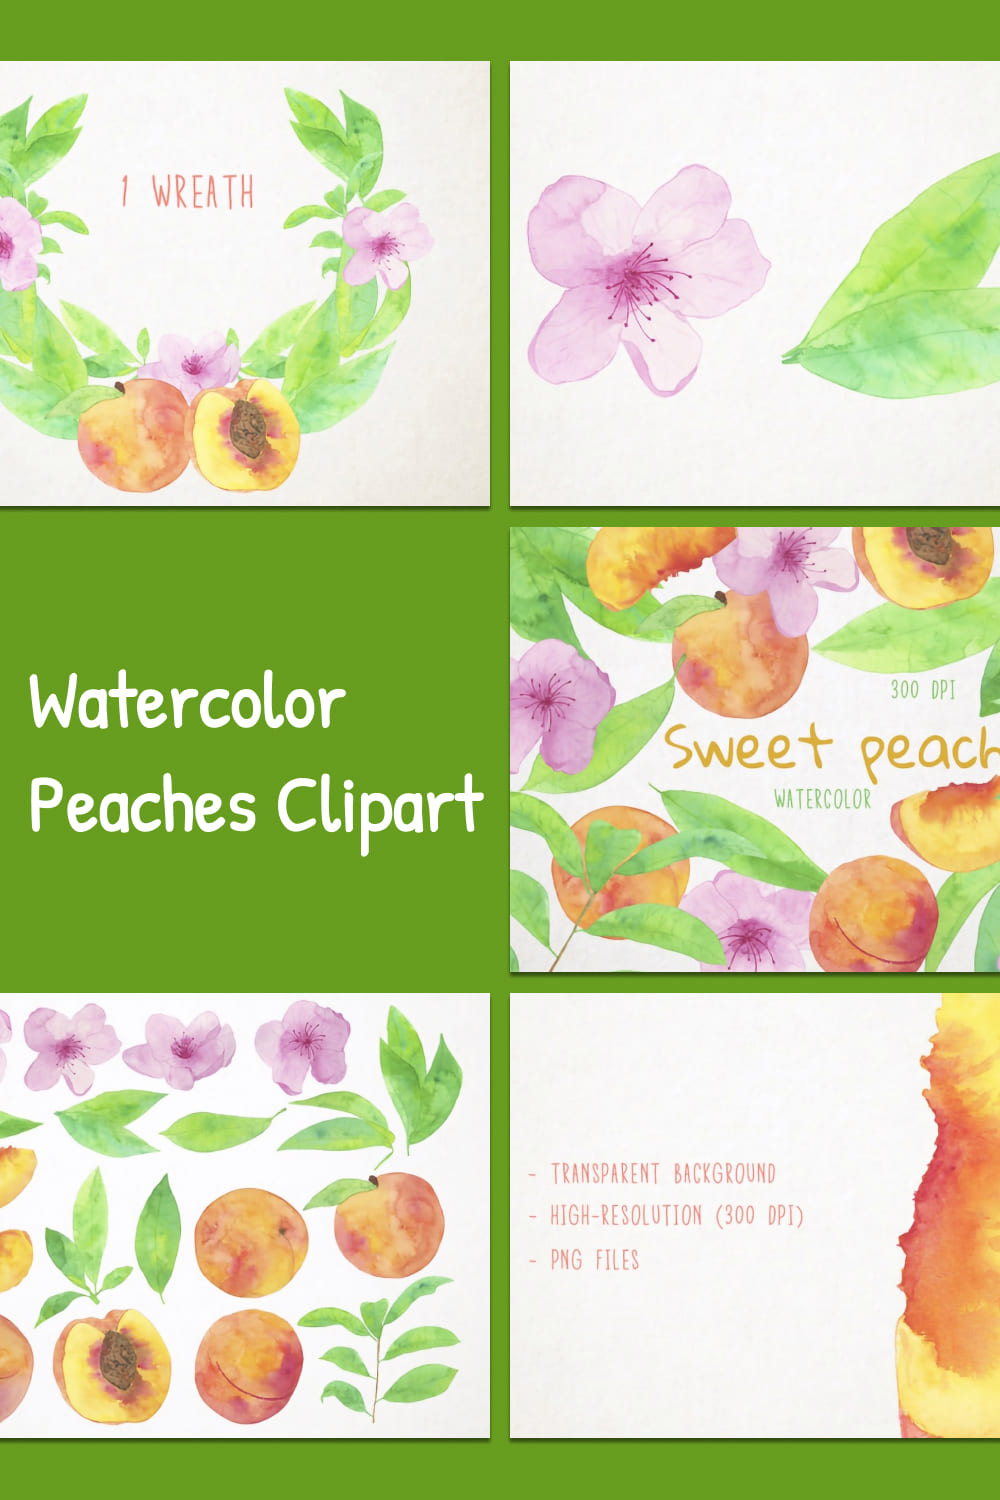 watercolor peaches clipart 03